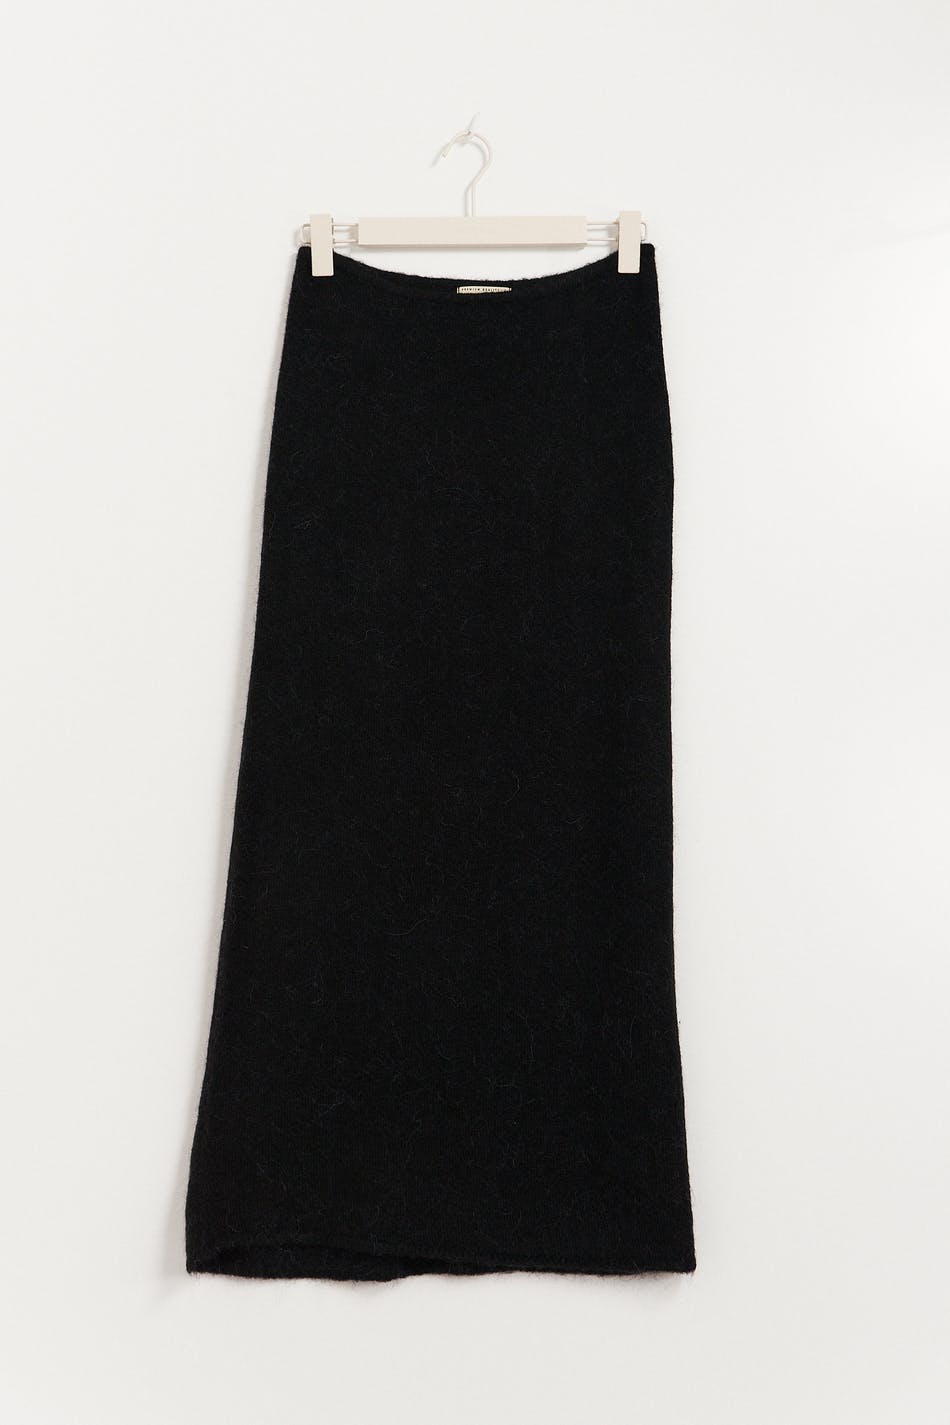  Gina Tricot- Knittted maxi skirt - strickröcke- Black - XL- Female